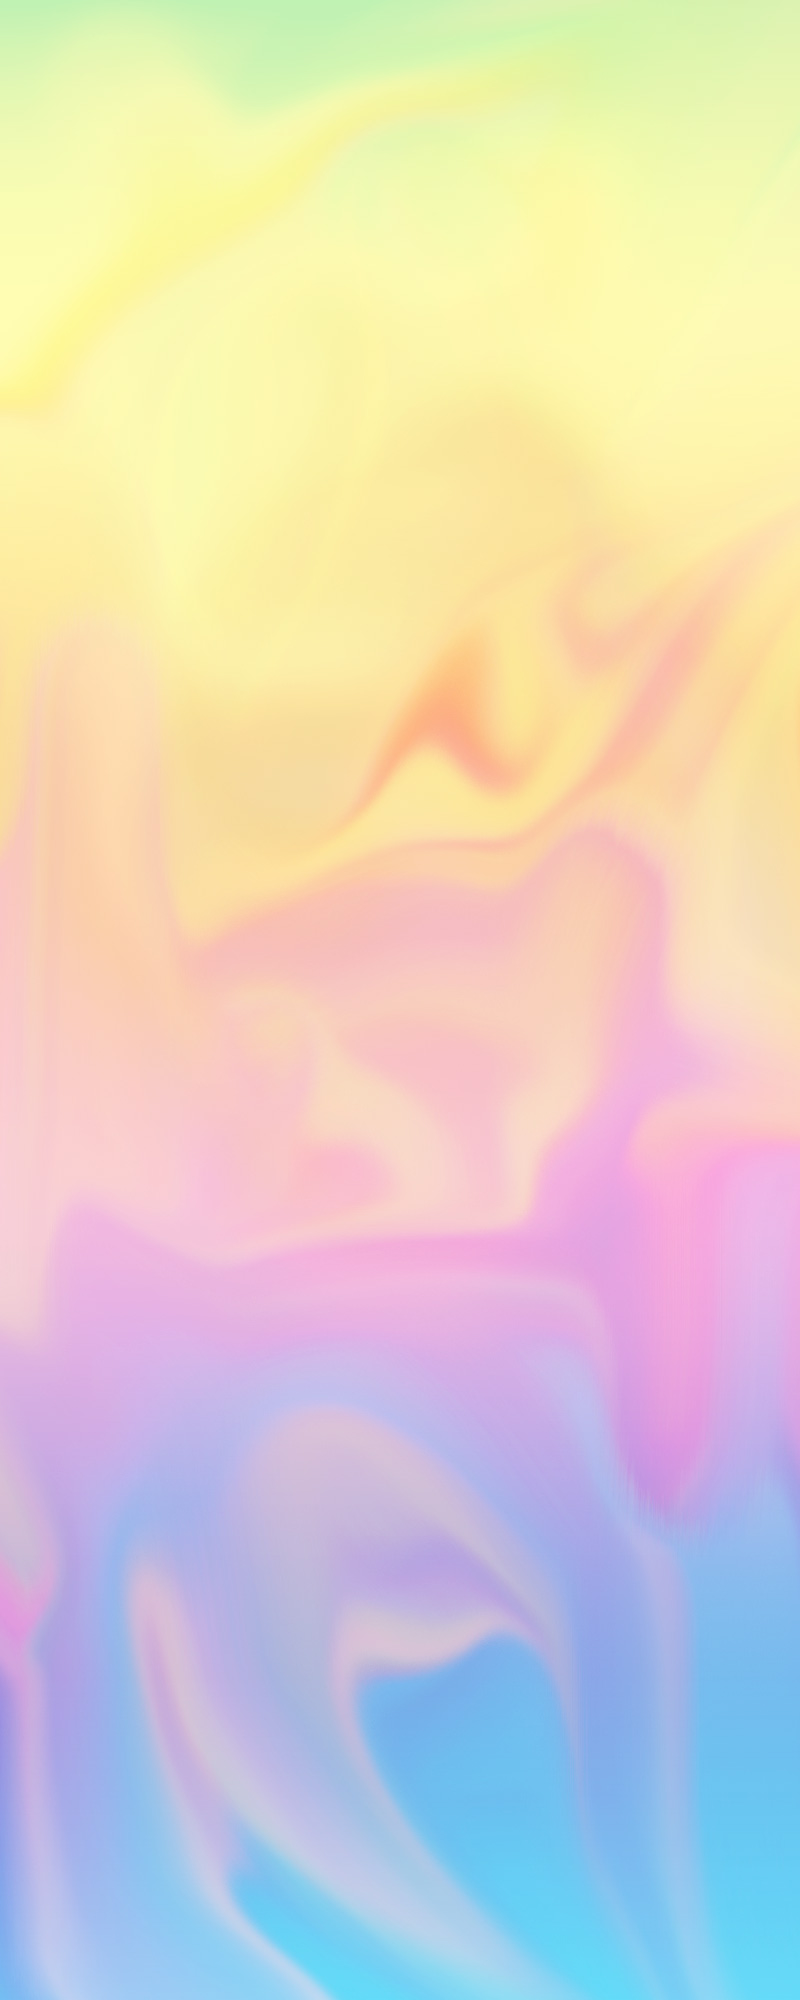 Pastel Soft Grunge Background For   pastel soft grunge